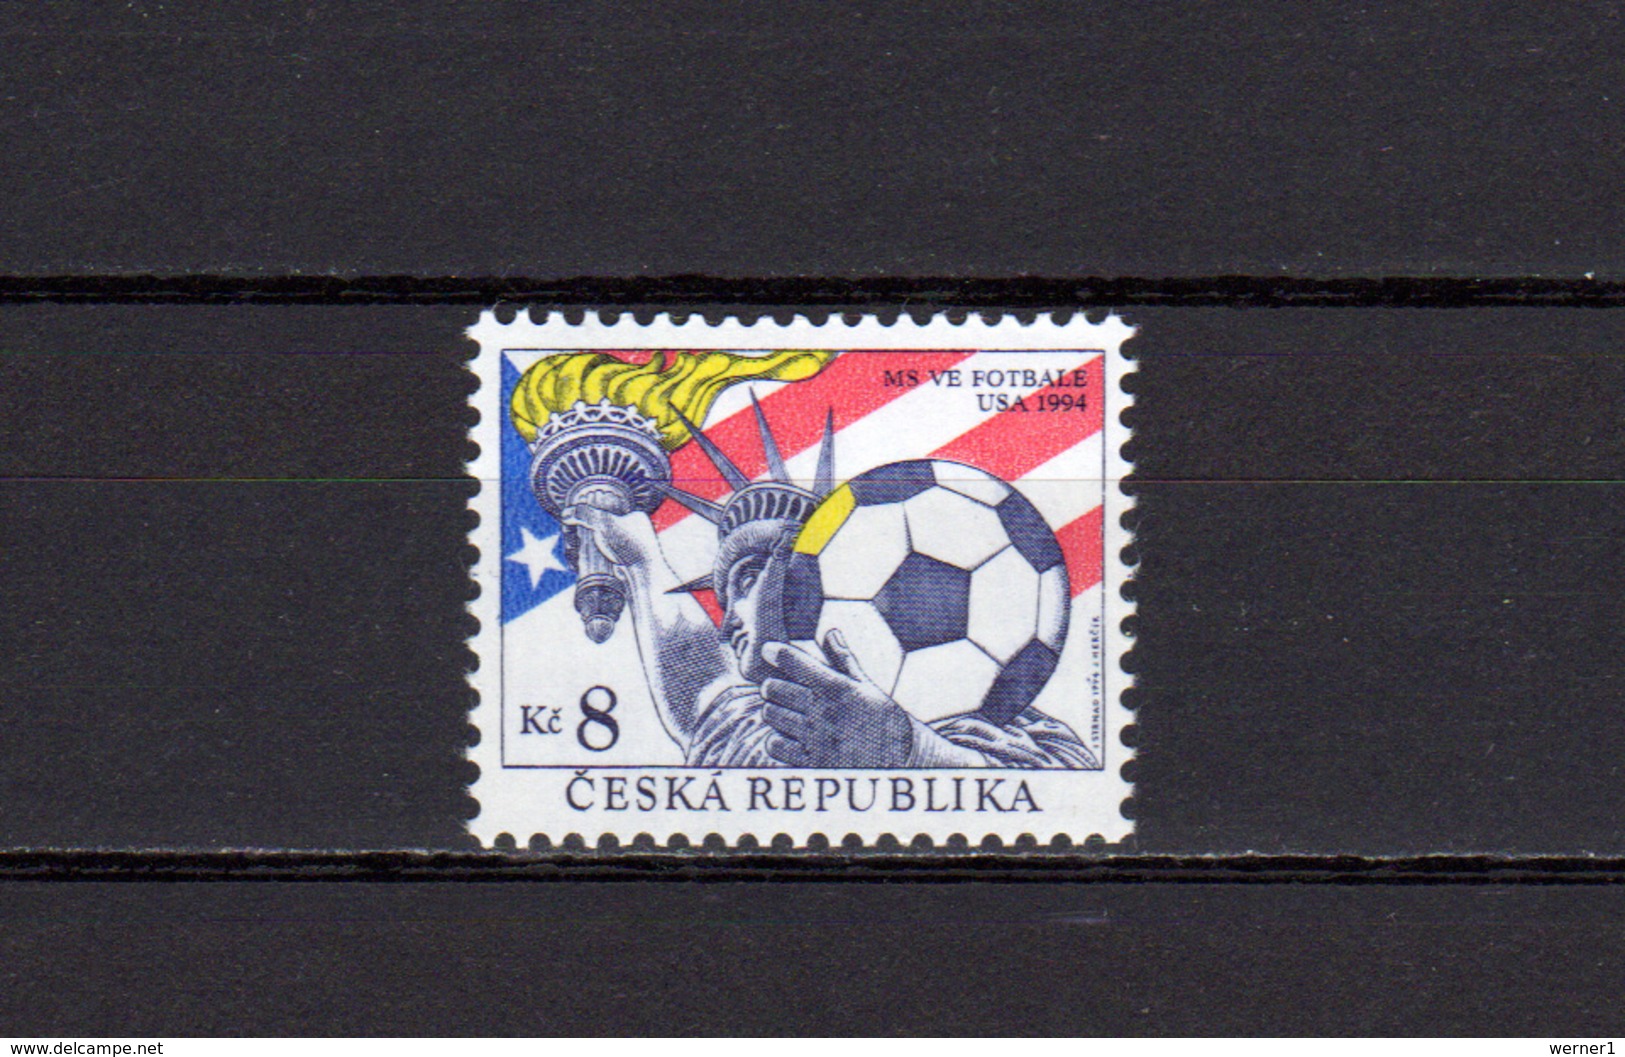 Czech Republic 1994 Football Soccer World Cup Stamp MNH - 1994 – Stati Uniti